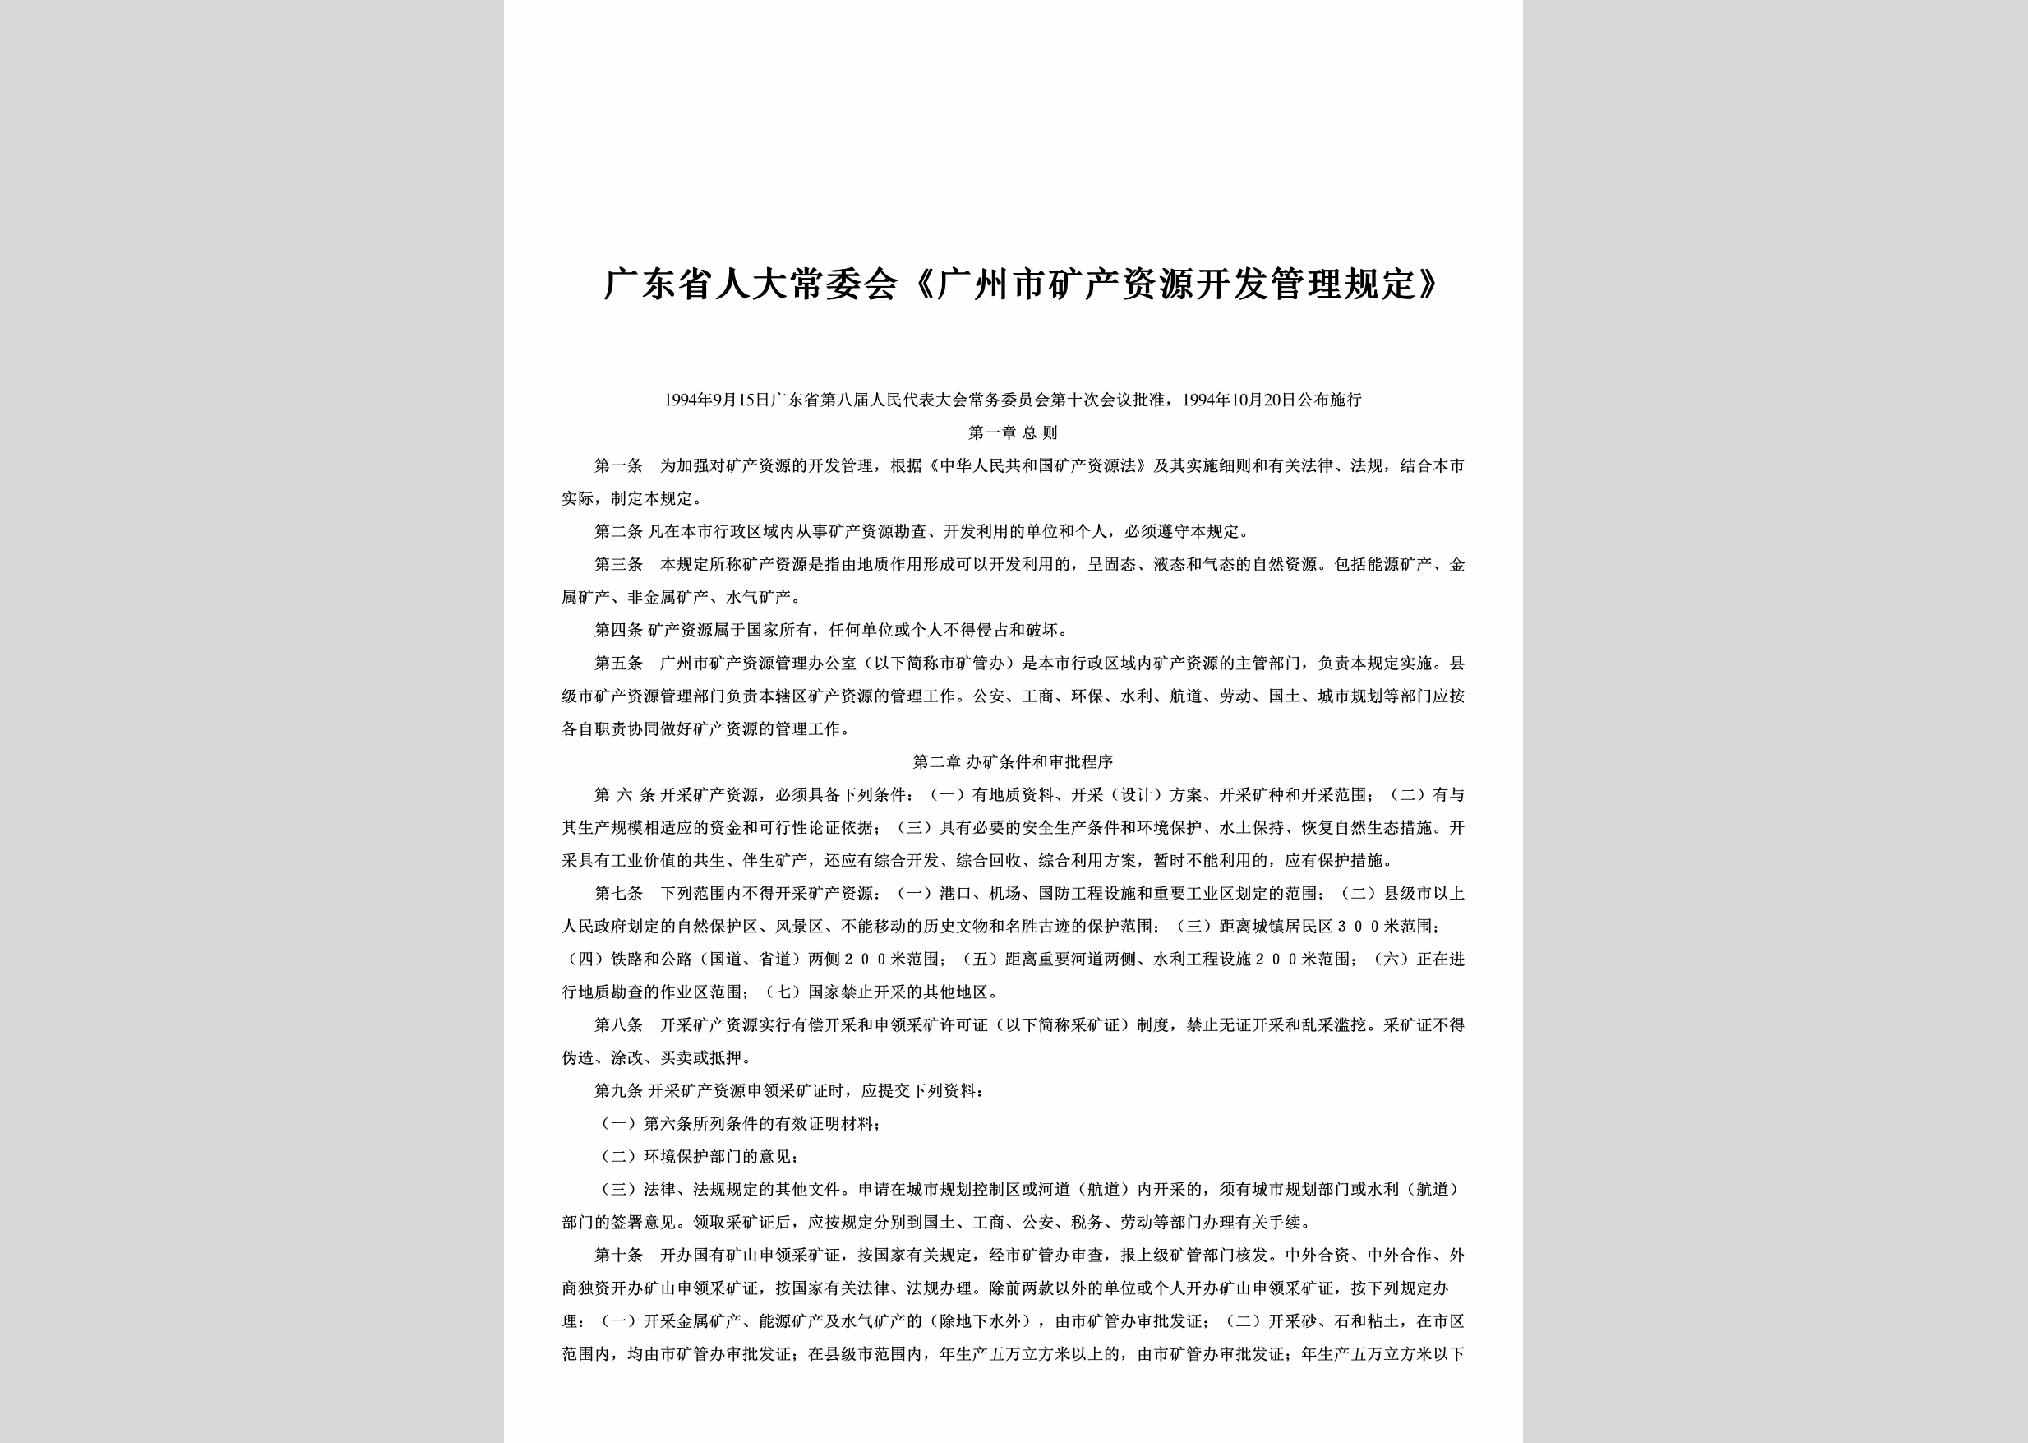 GD-KCKFGLGD-1994：《广州市矿产资源开发管理规定》